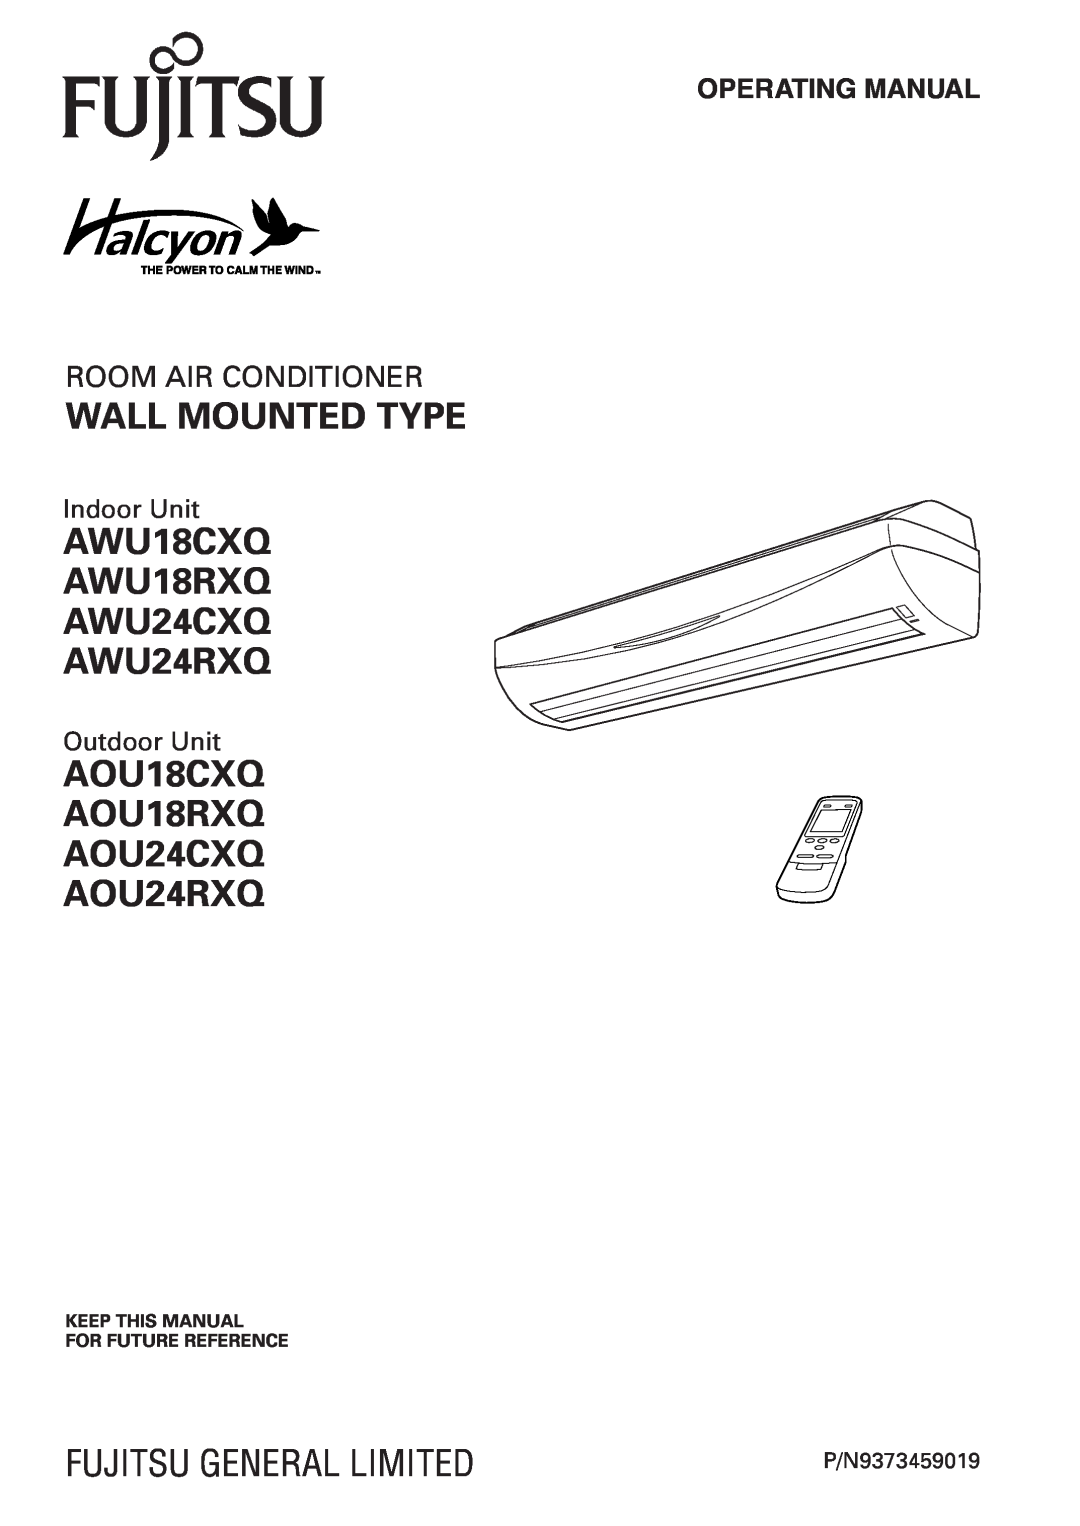 Fujitsu manual Indoor Unit, Outdoor Unit, Wall Mounted Type, AWU18CXQ AWU18RXQ AWU24CXQ AWU24RXQ, Room Air Conditioner 